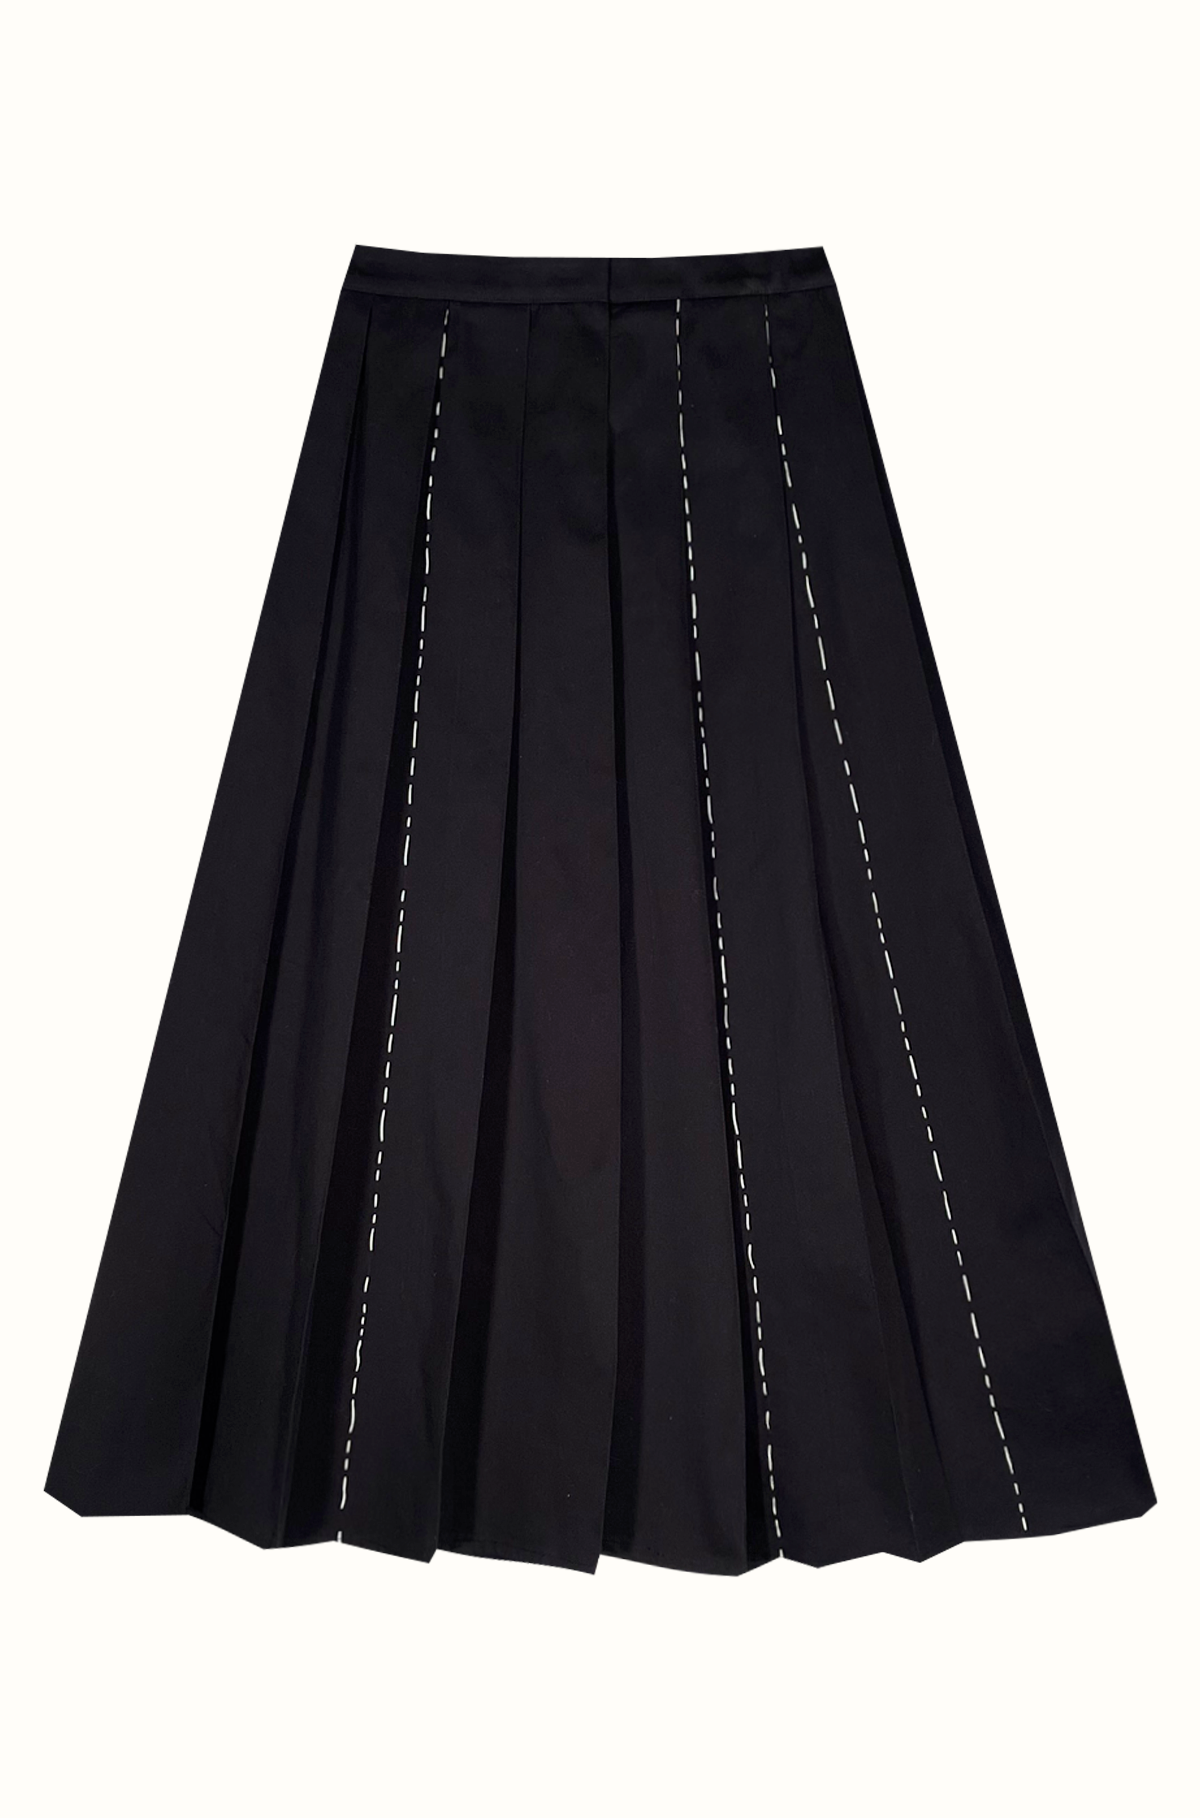 Sophie skirt black version for pre-order